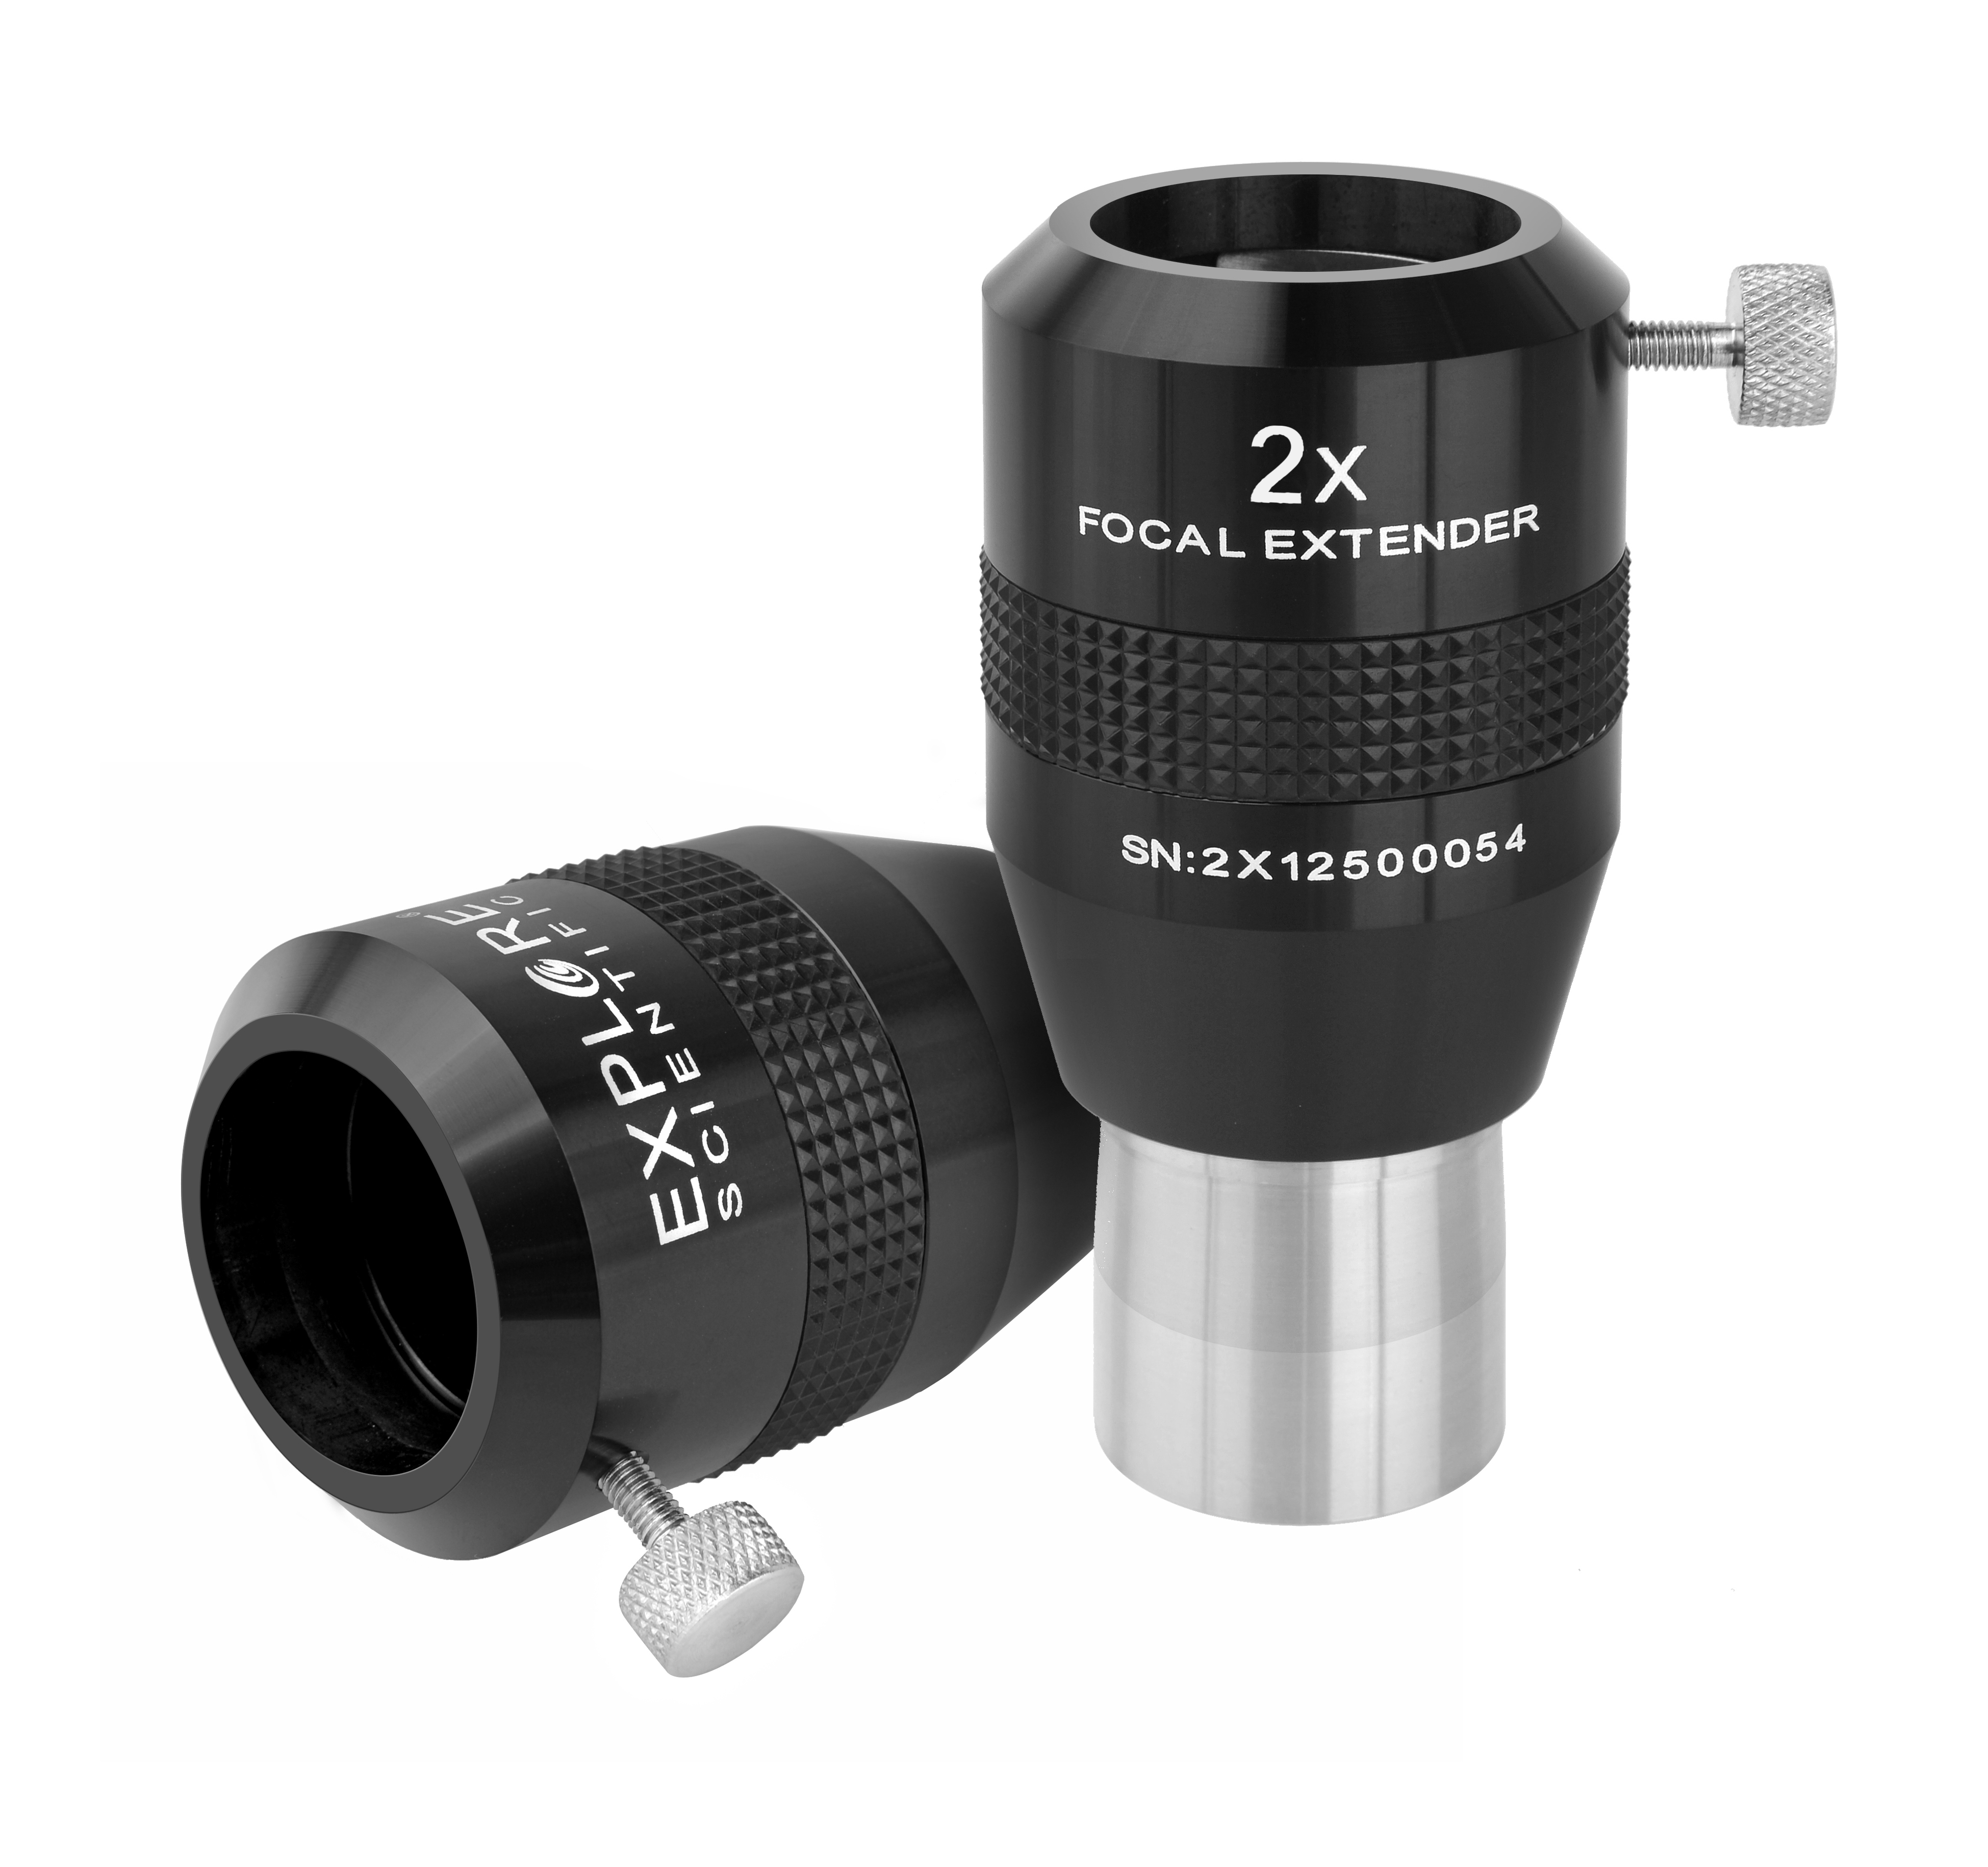 EXPLORE SCIENTIFIC Fokal Extender 2x 31.7mm/1.25"